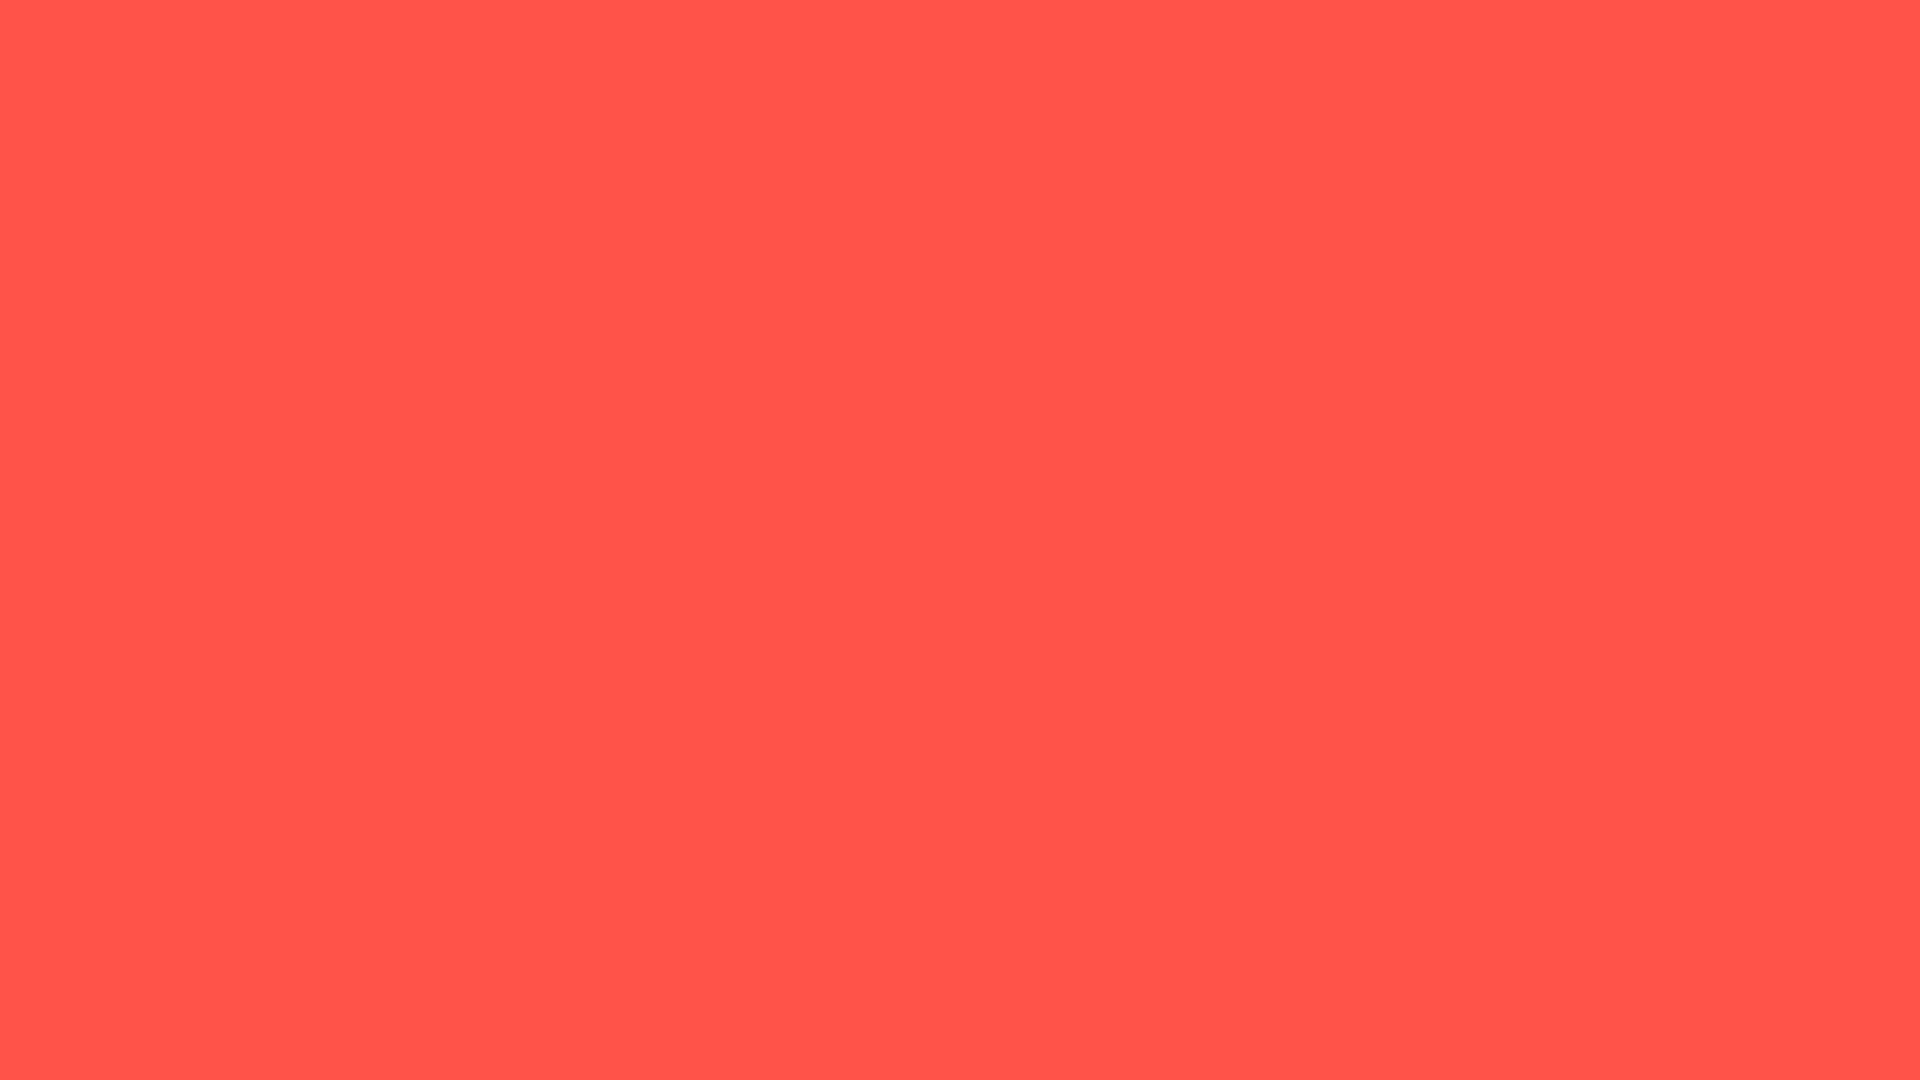 1920x1080 Red-orange Solid Color Background